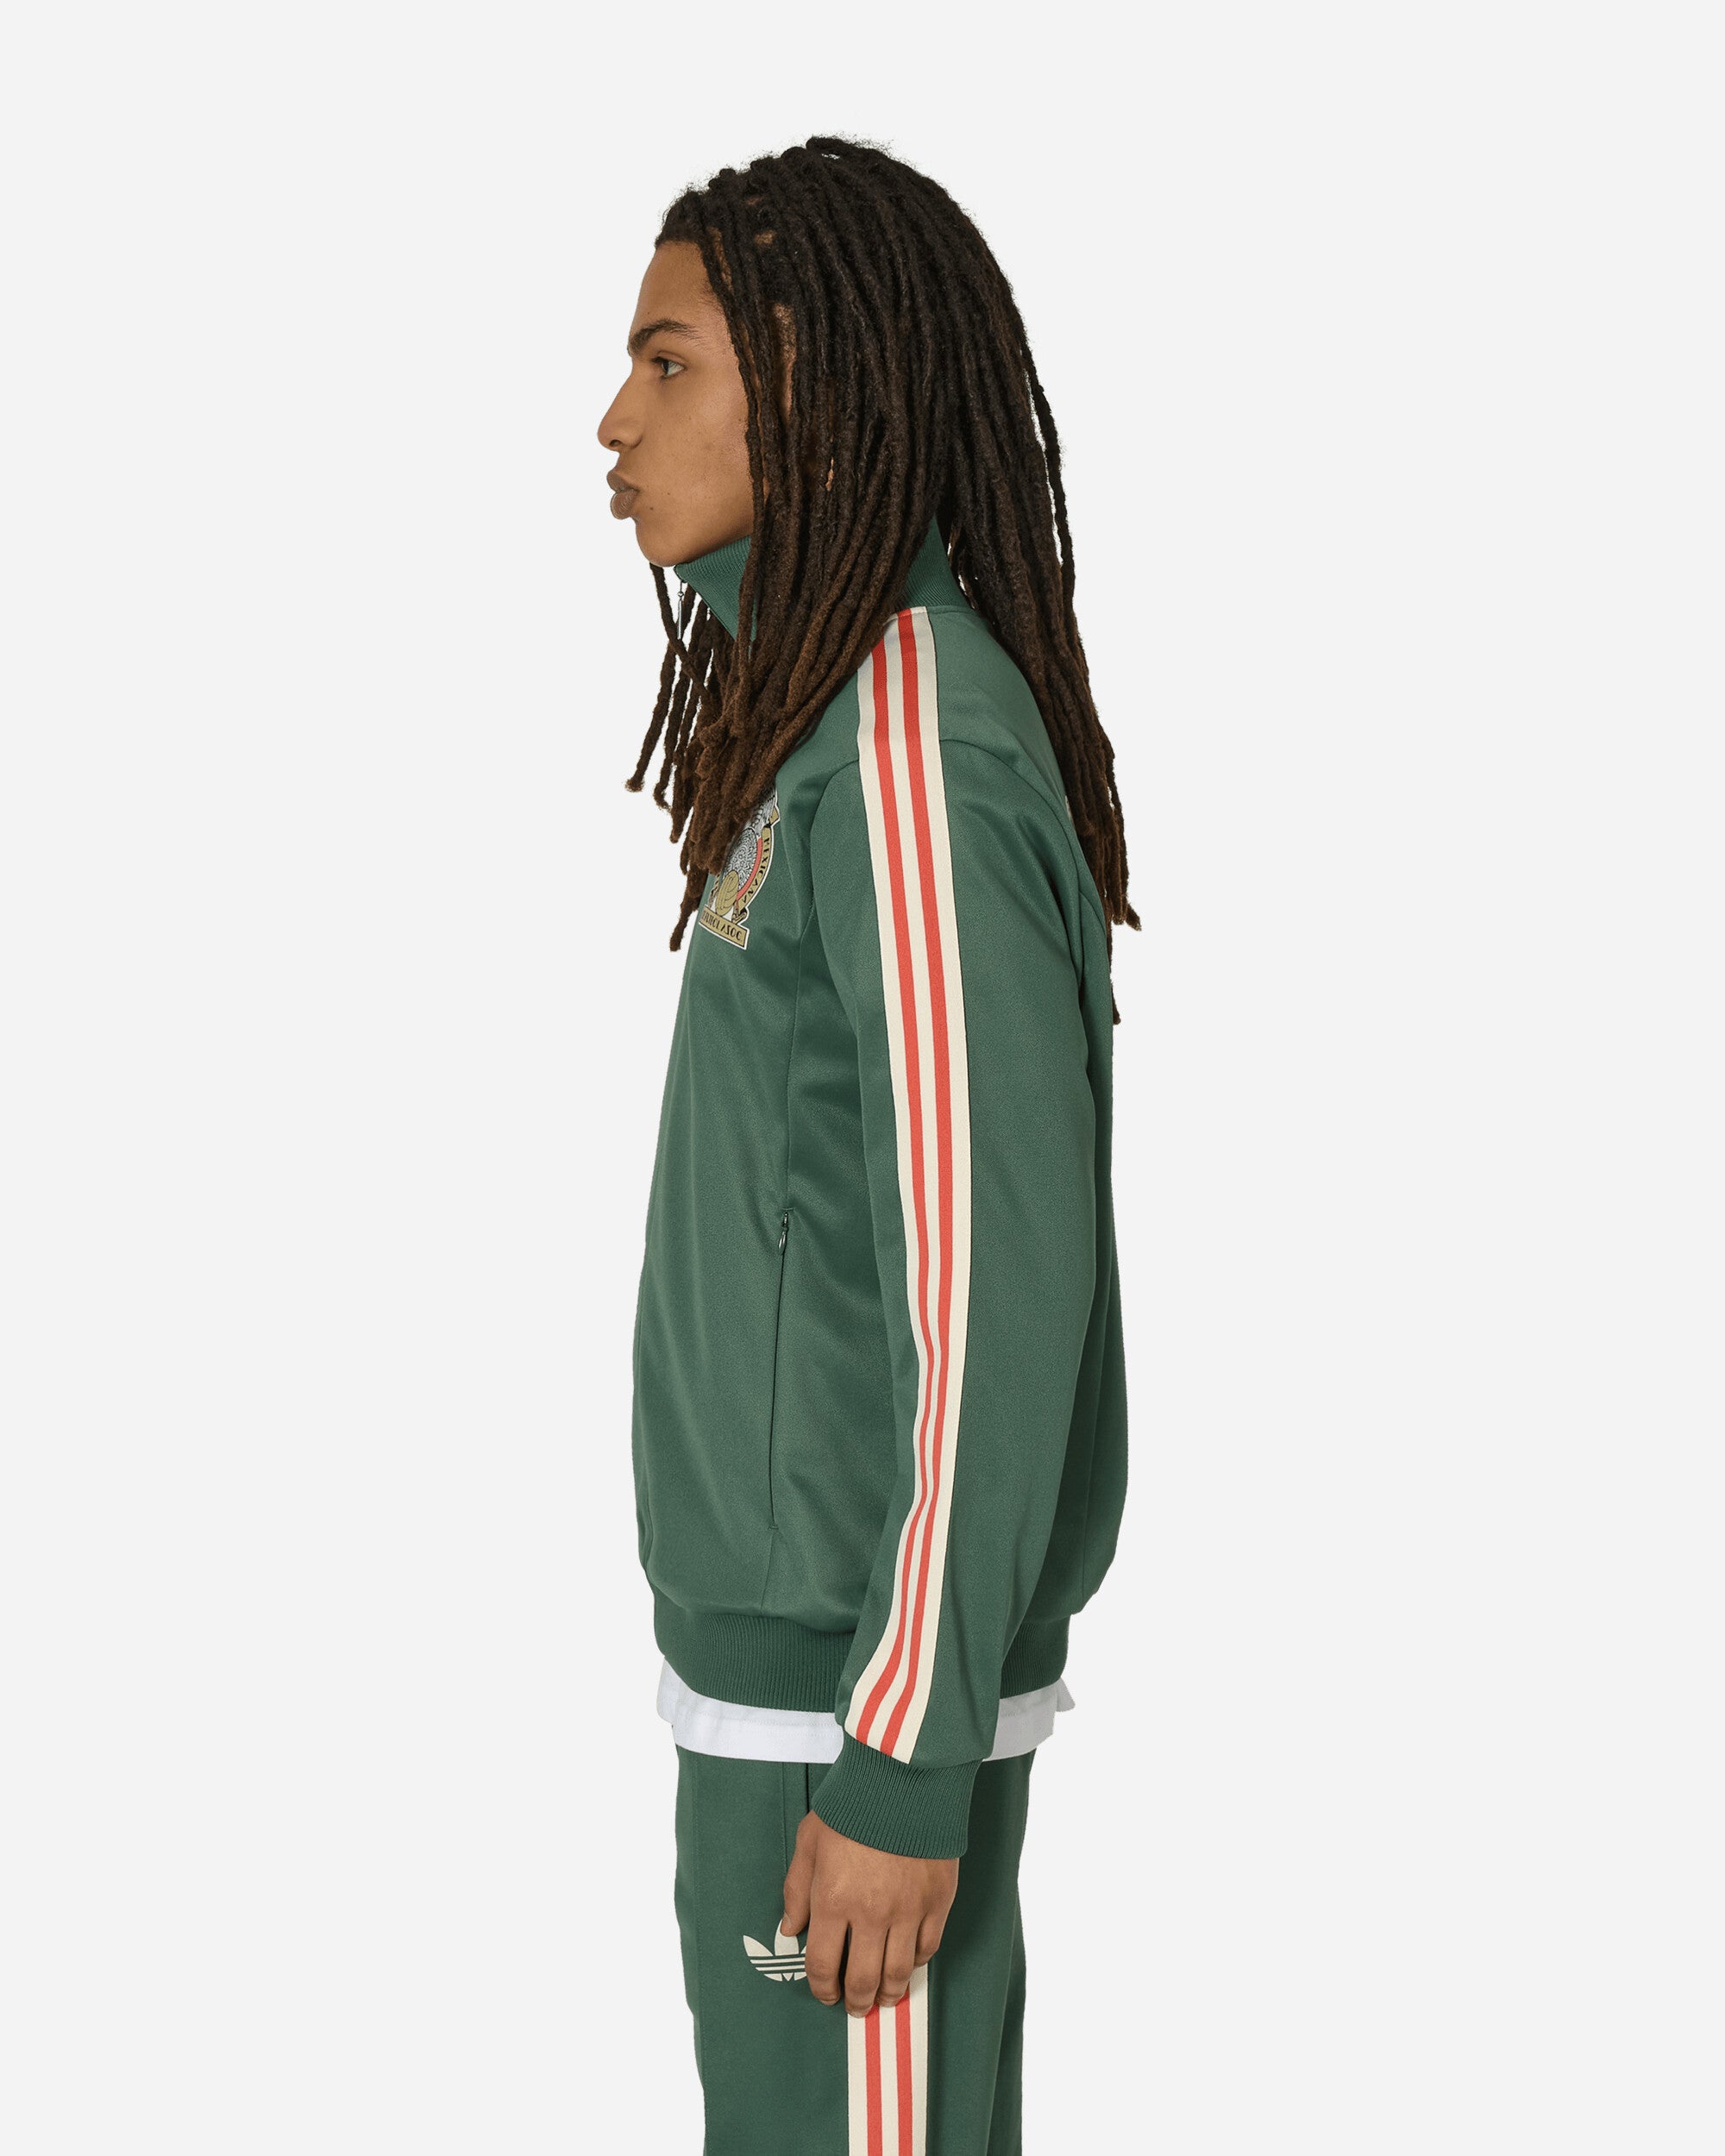 adidas Fmf Og Bb Tt Green Oxide Sweatshirts Track Tops IU2175 001